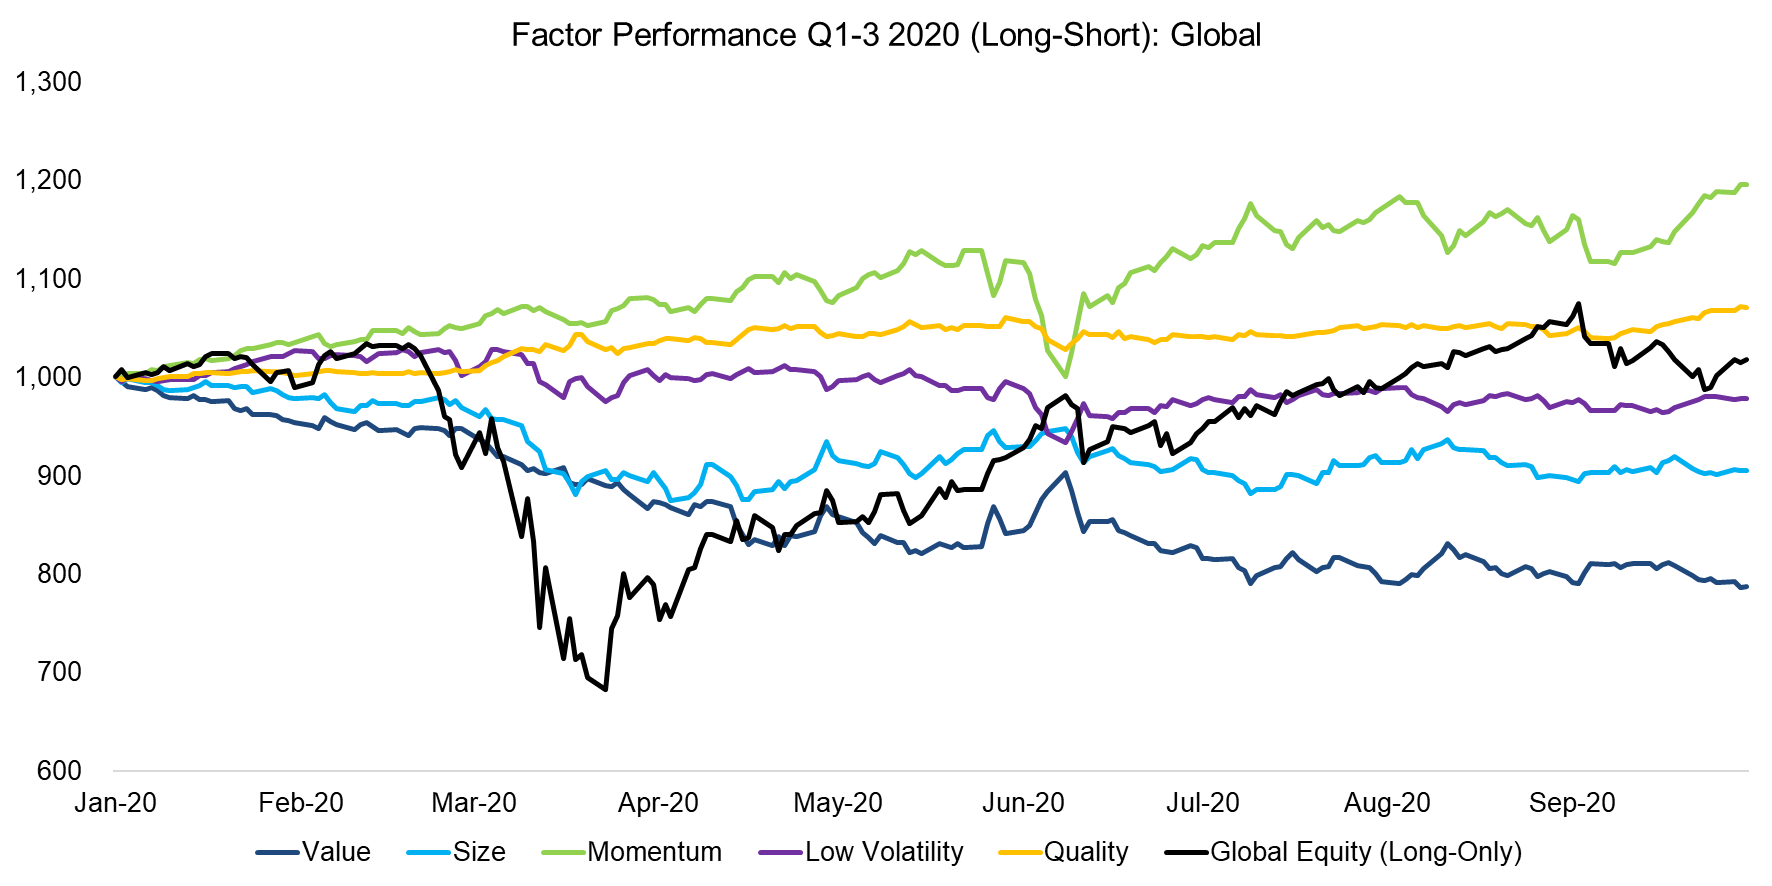 Factor Performance Q1-3 2020 (Long-Short) Global